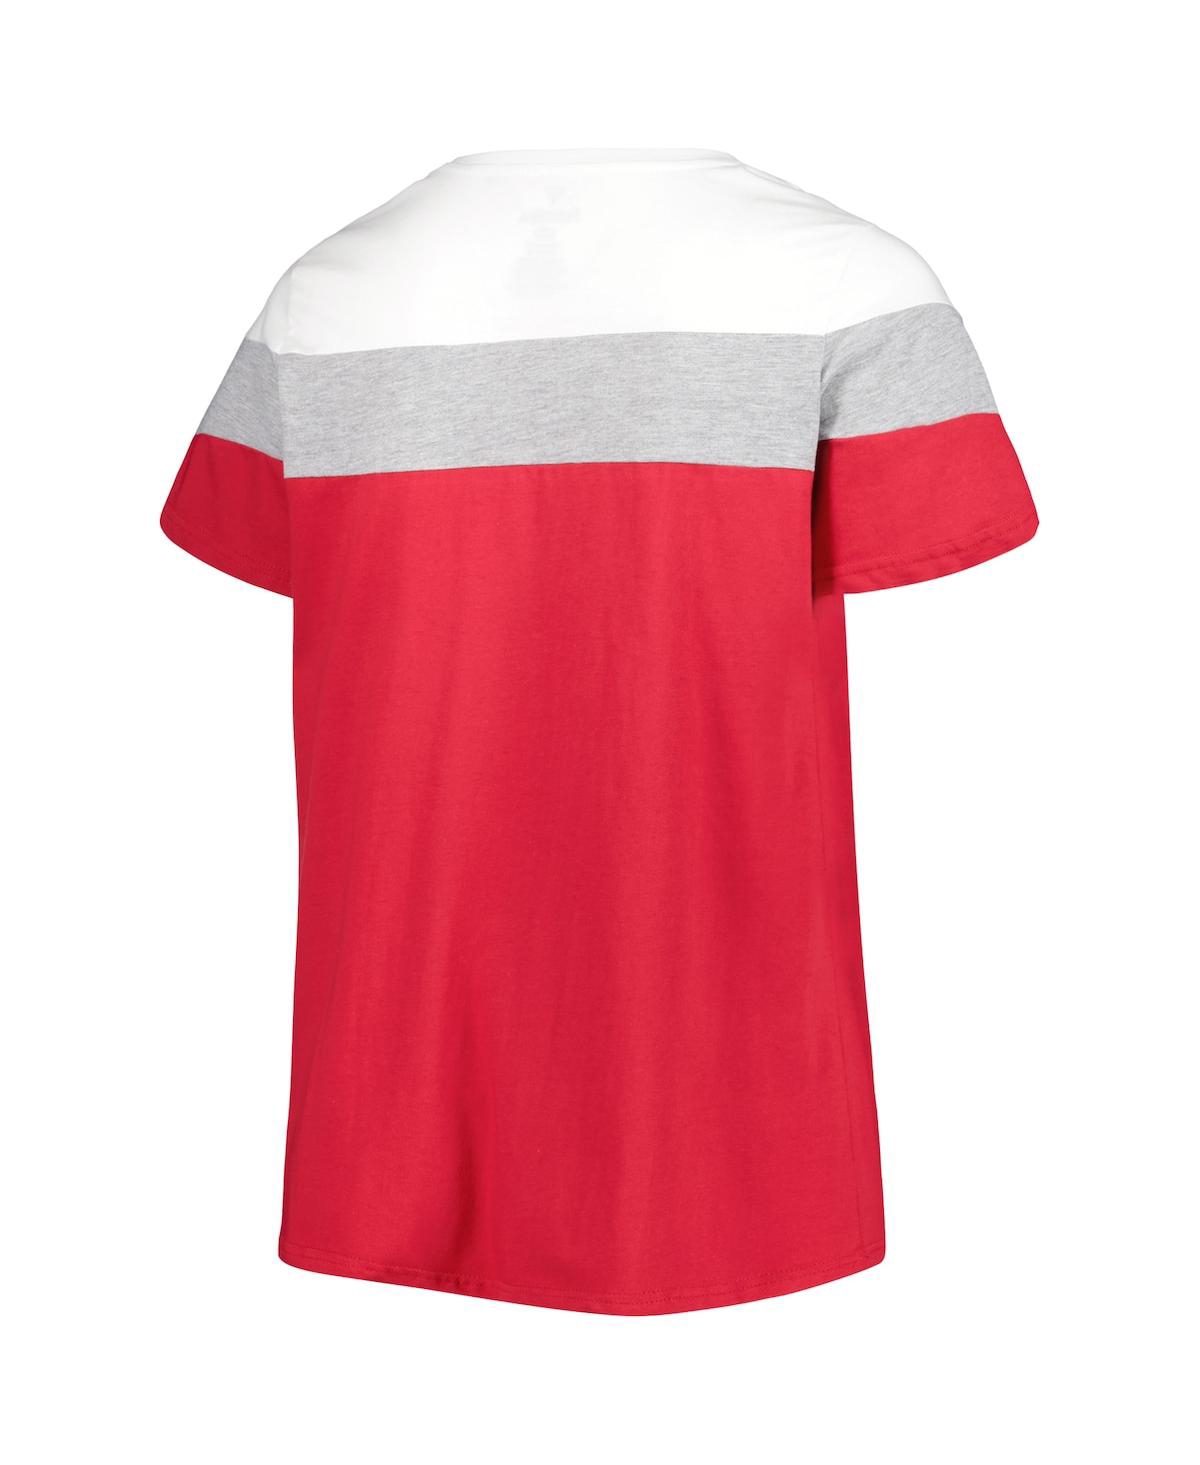 Shop Profile Women's Crimson Oklahoma Sooners Plus Size Split Body T-shirt